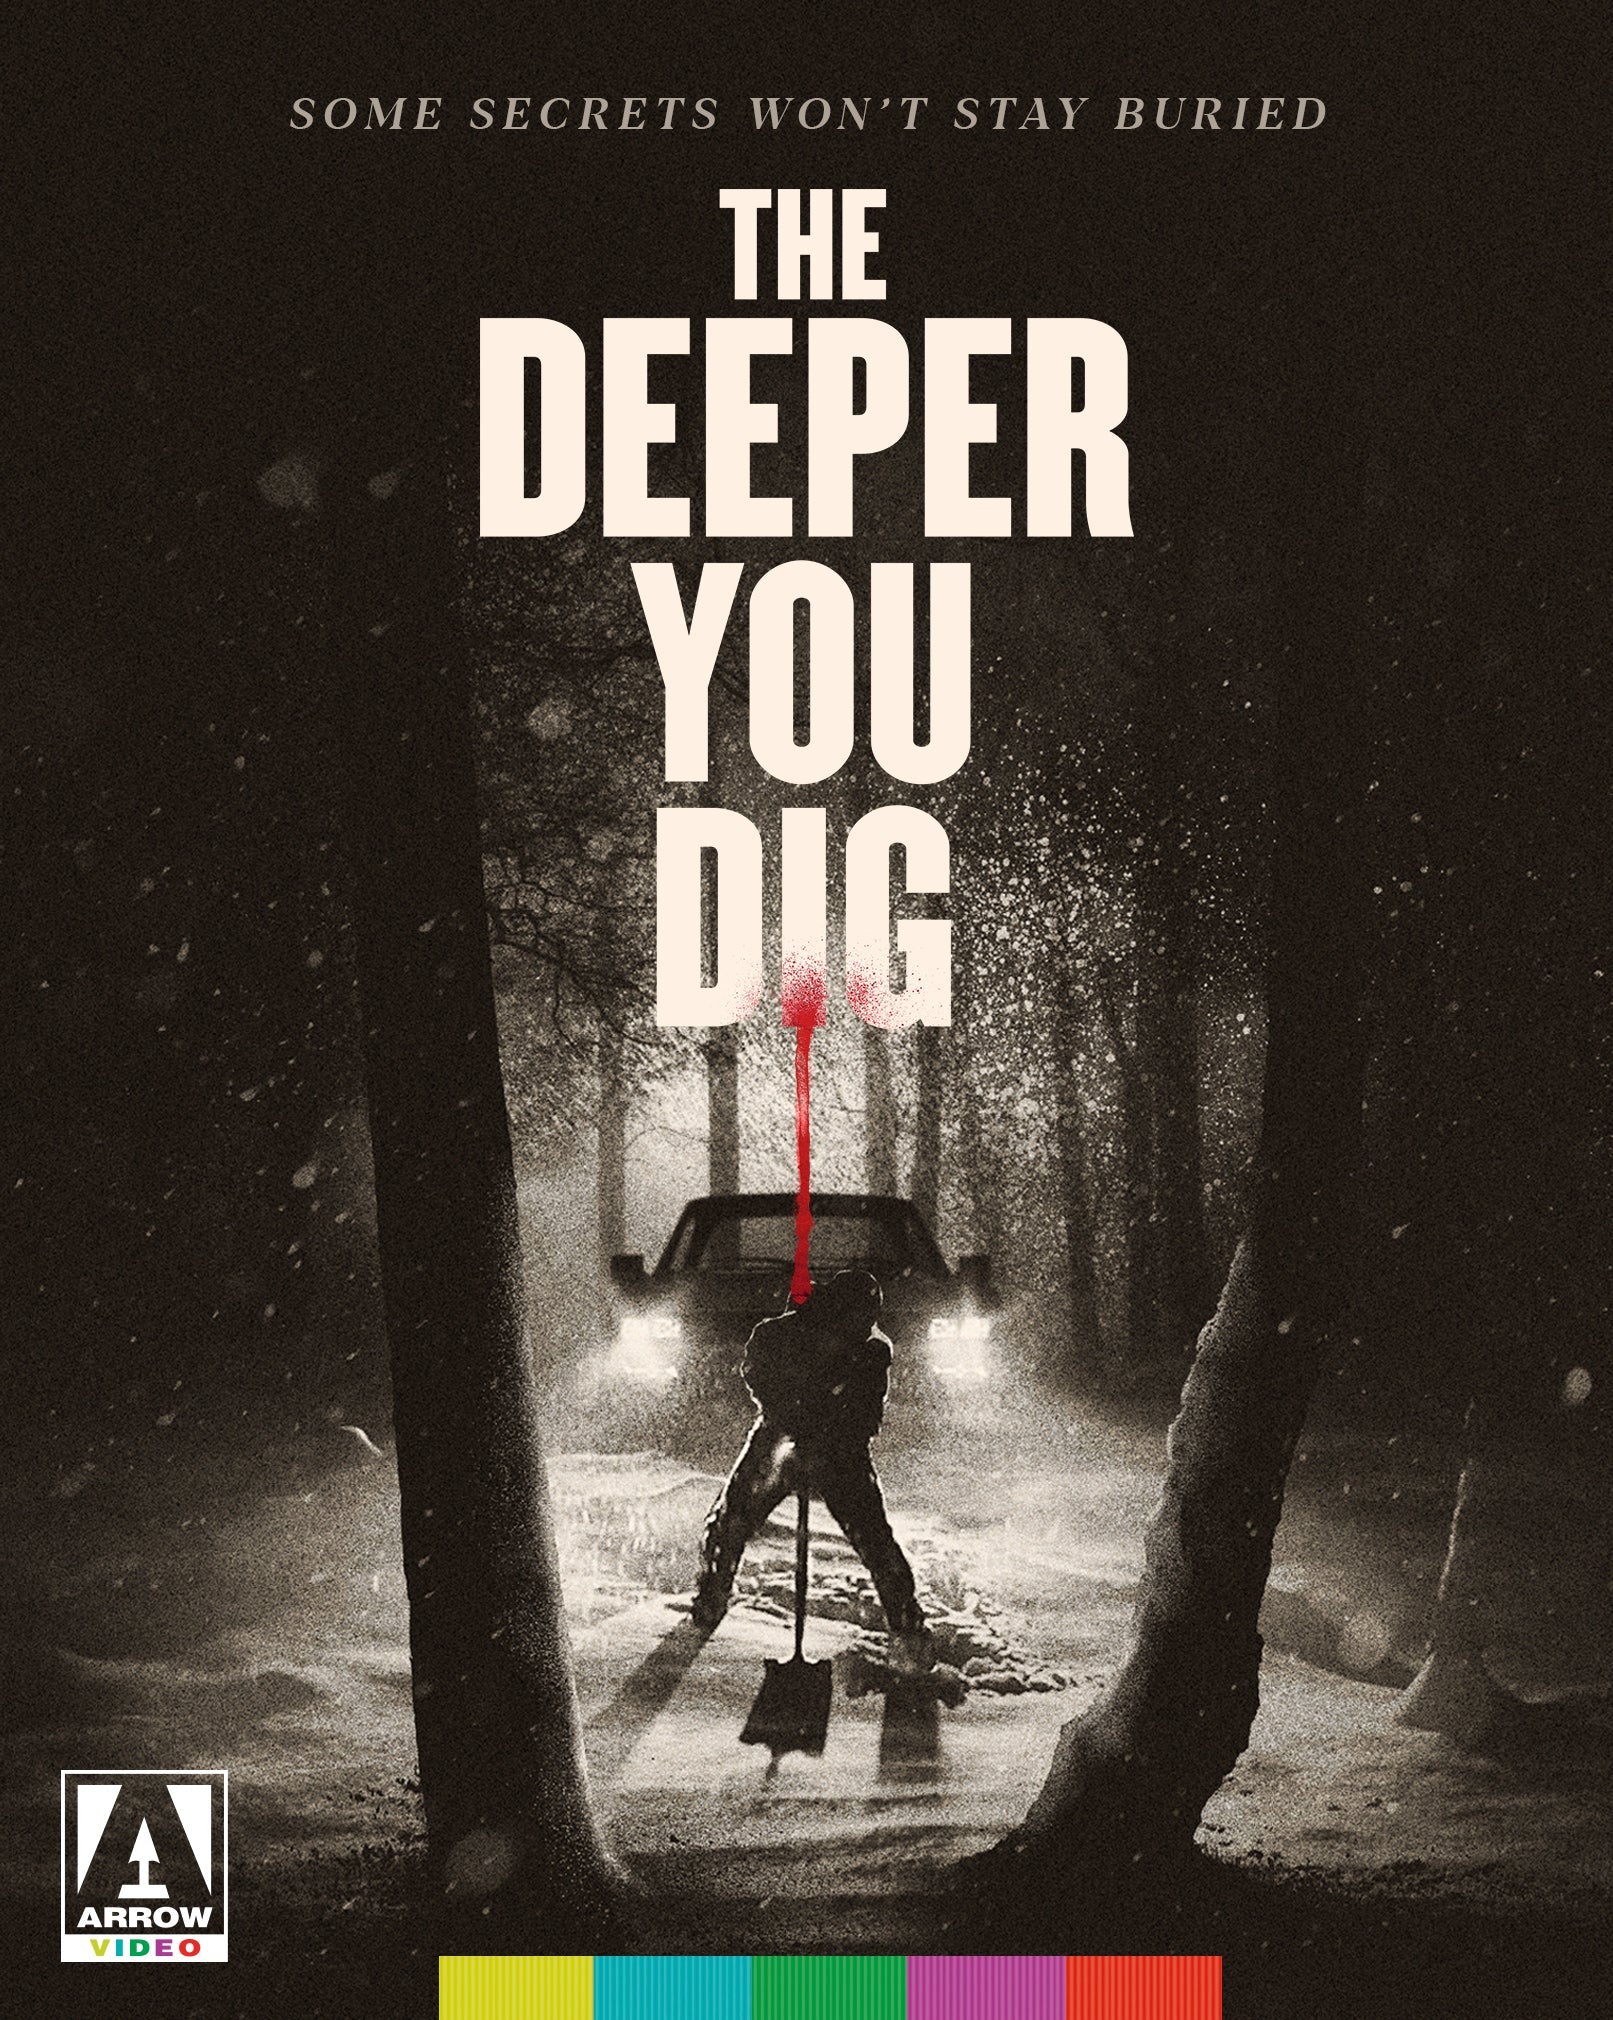 The Deeper You Dig Blu-Ray Blu-Ray